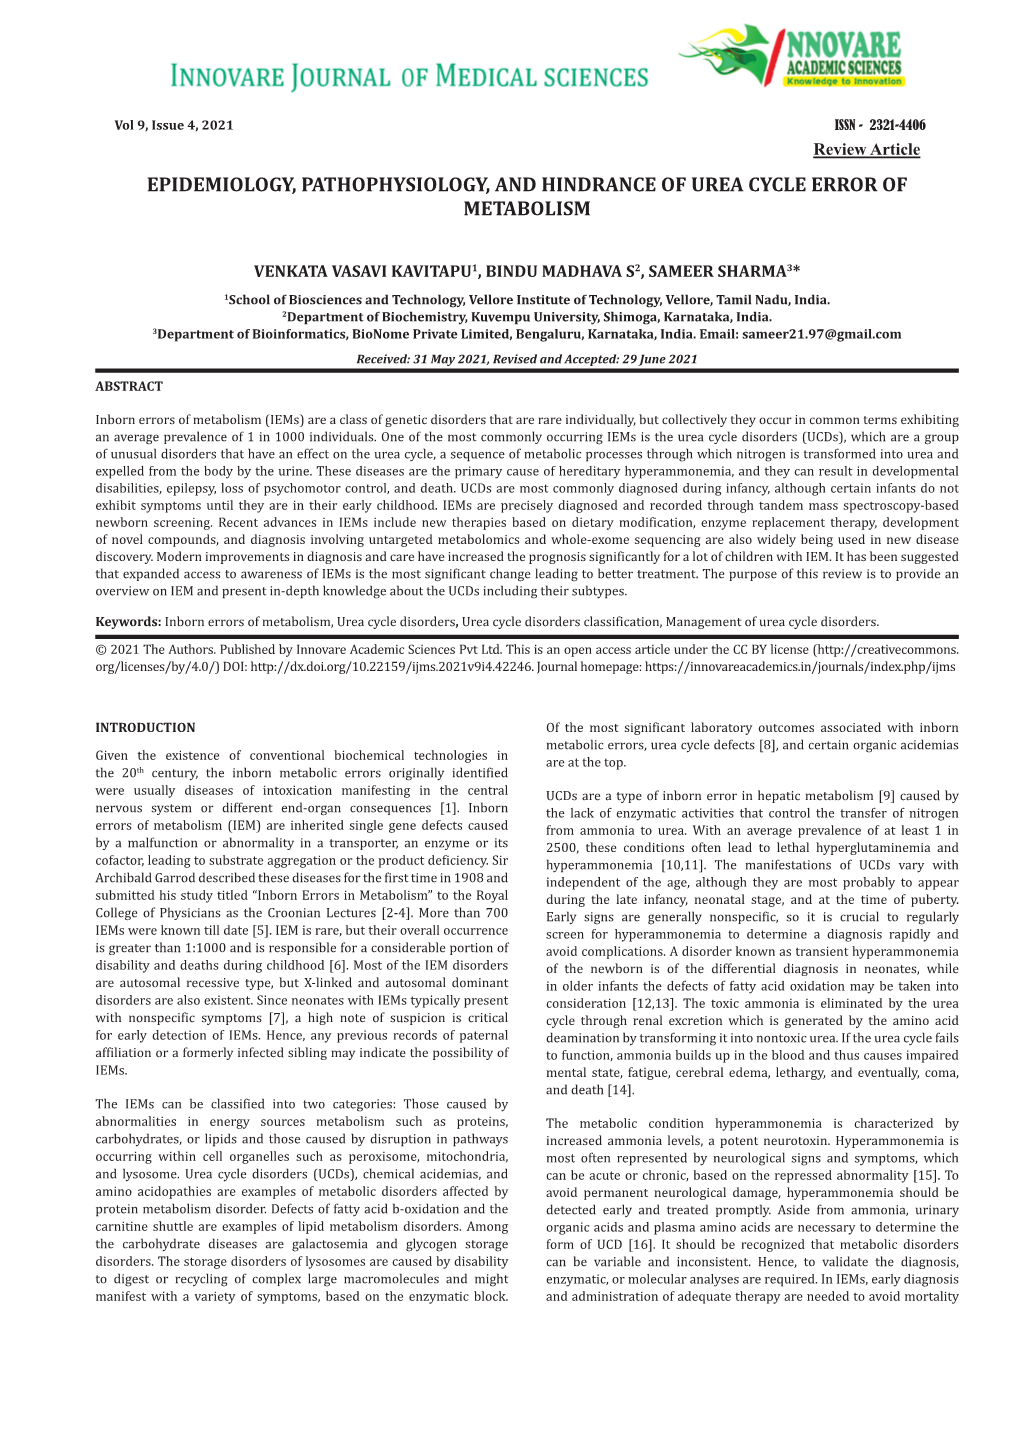 Epidemiology, Pathophysiology, and Hindrance of Urea Cycle Error of Metabolism